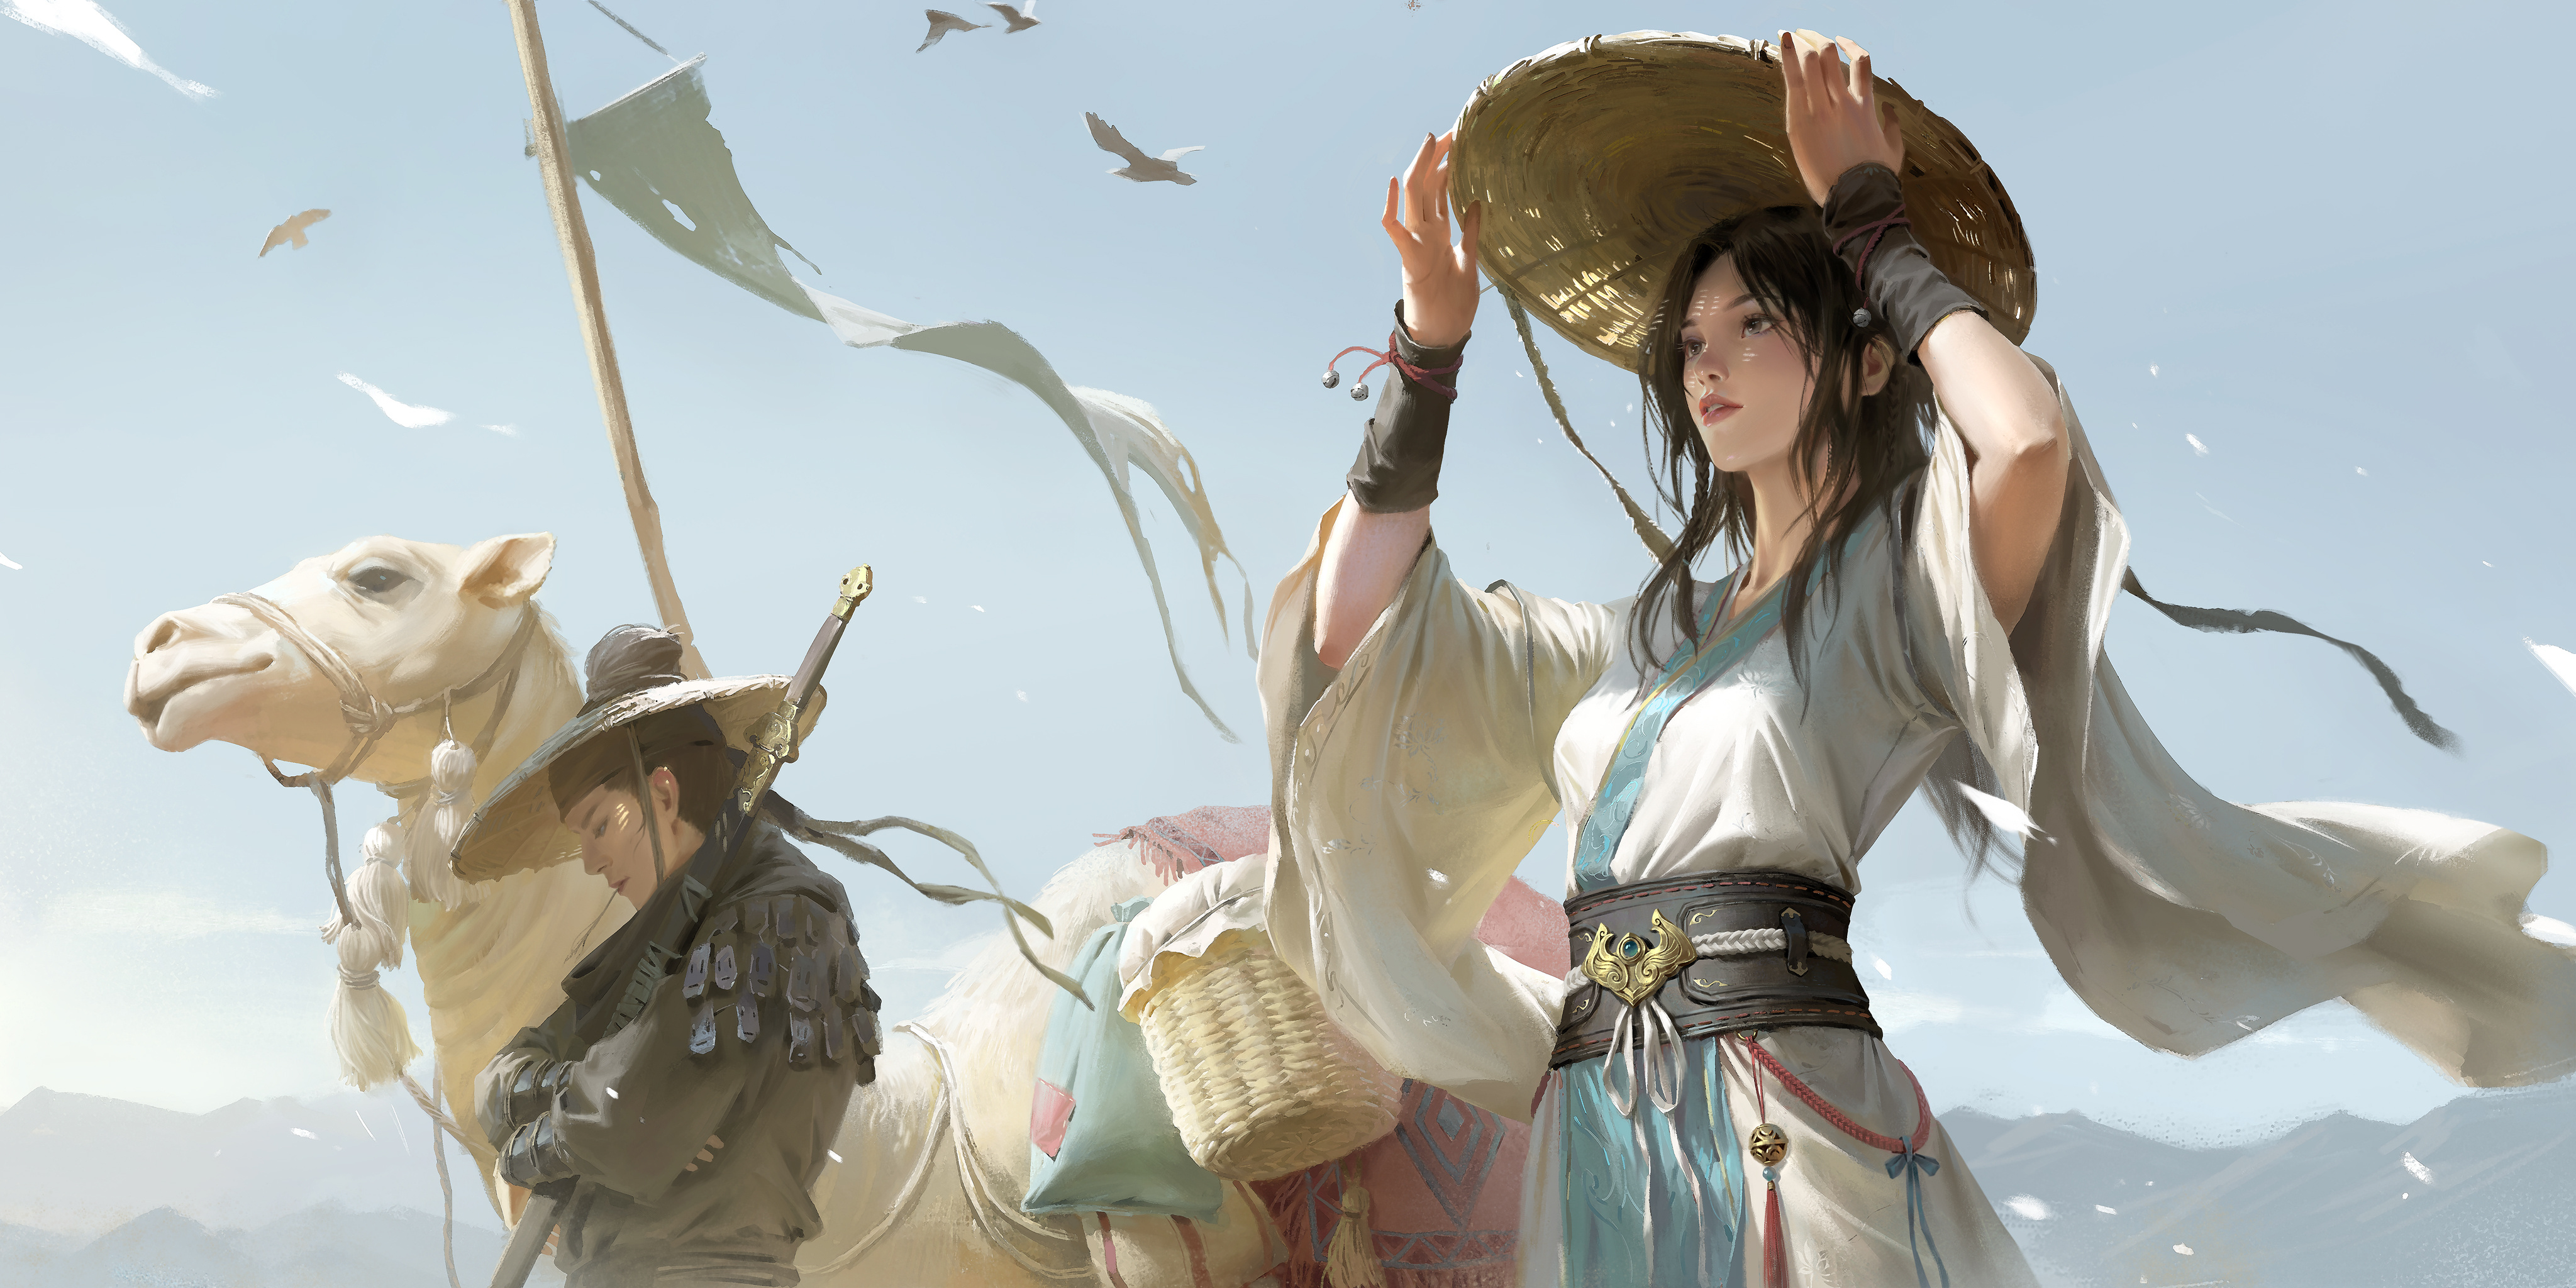 Wang Xiao Digital Art Artwork Illustration Couple Women Men Camels Animals Sword Hat Birds Looking A 4096x2048